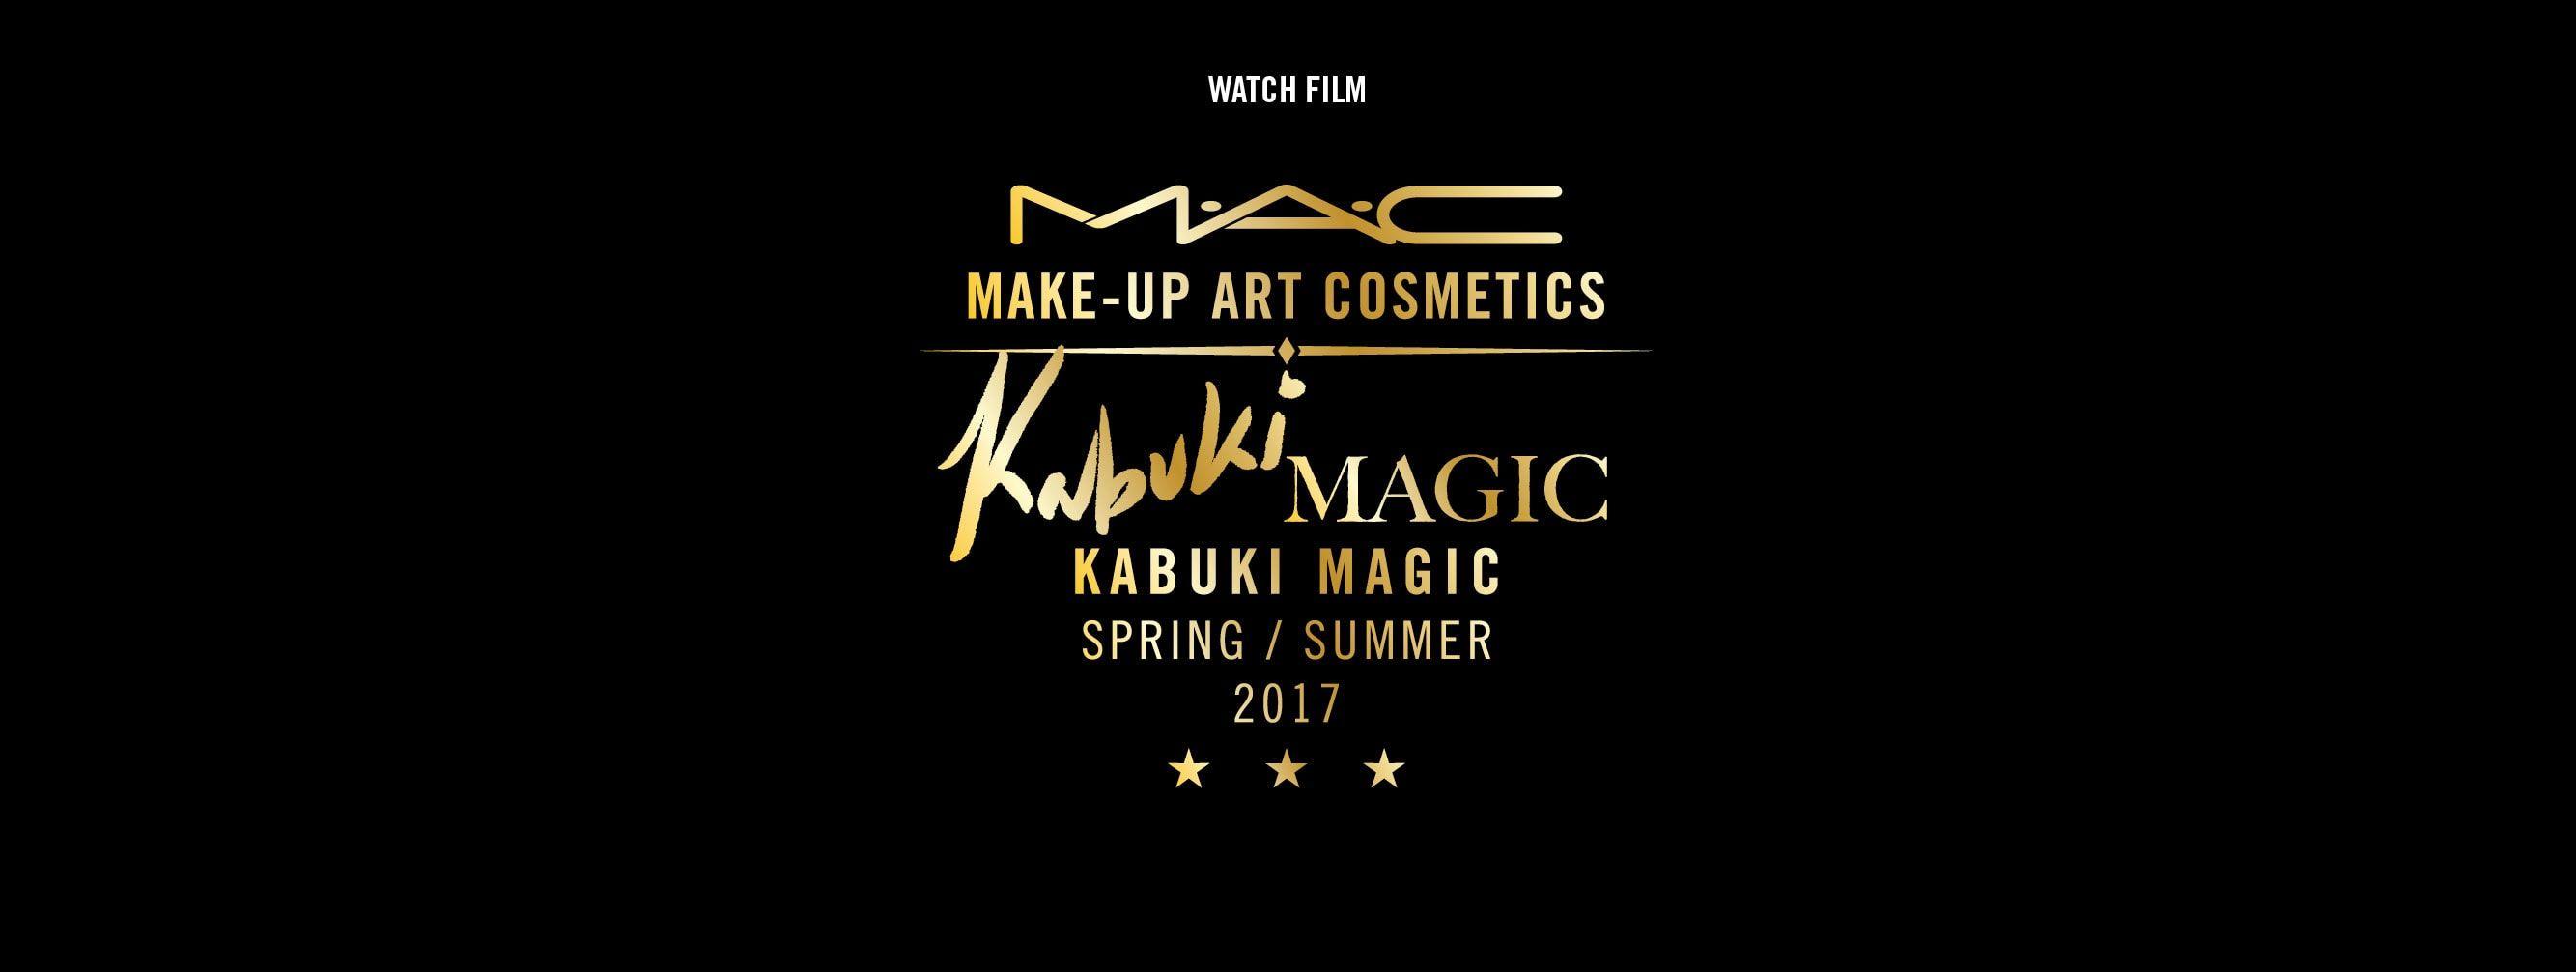 Make Up Art Cosmetics Logo - Make Up Art Cosmetics Collection Page